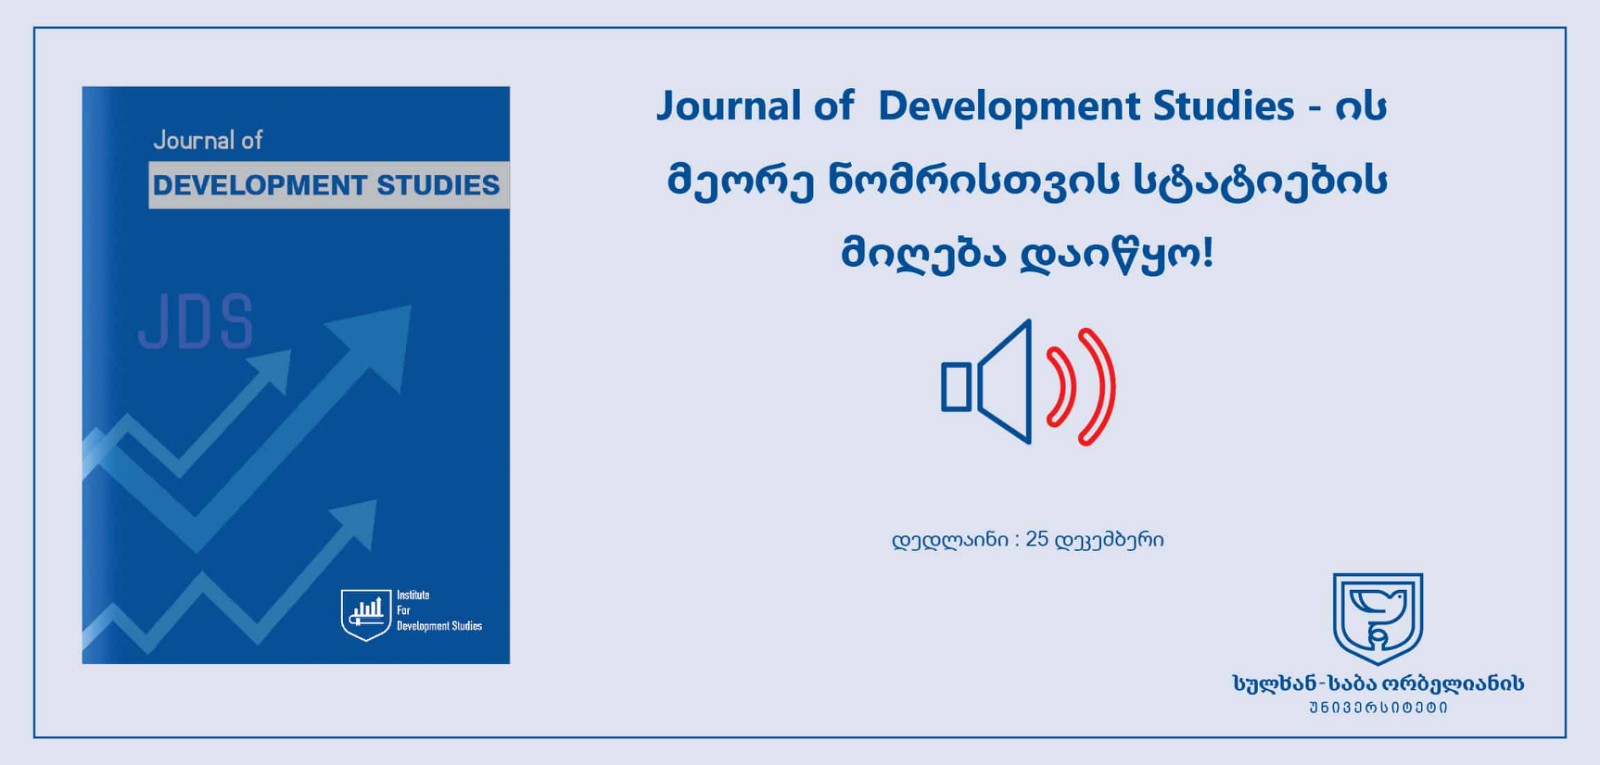 Journal of Development Studies მეორე ნომრისთვის სტატიების მირება დაიწყო